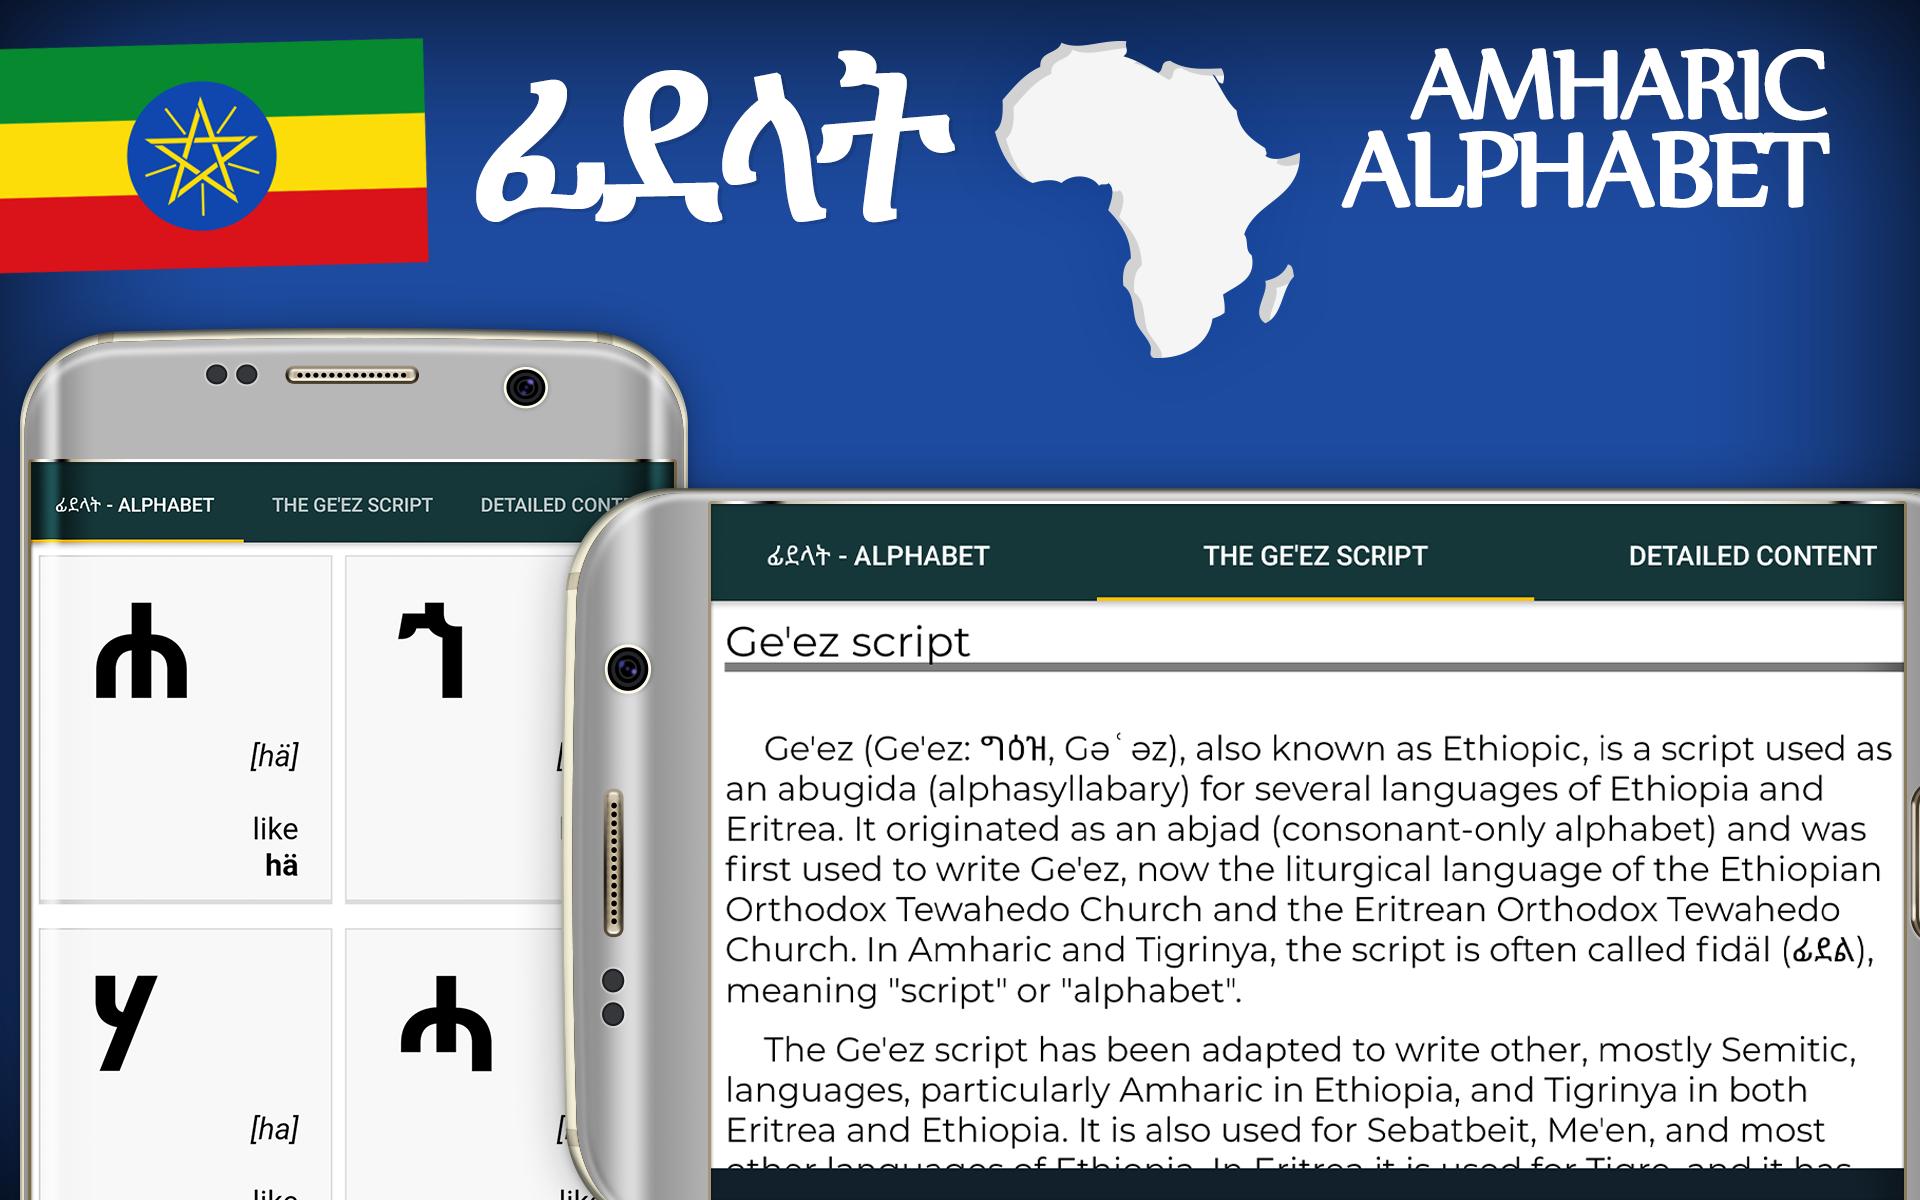 Amharic. Script meaning